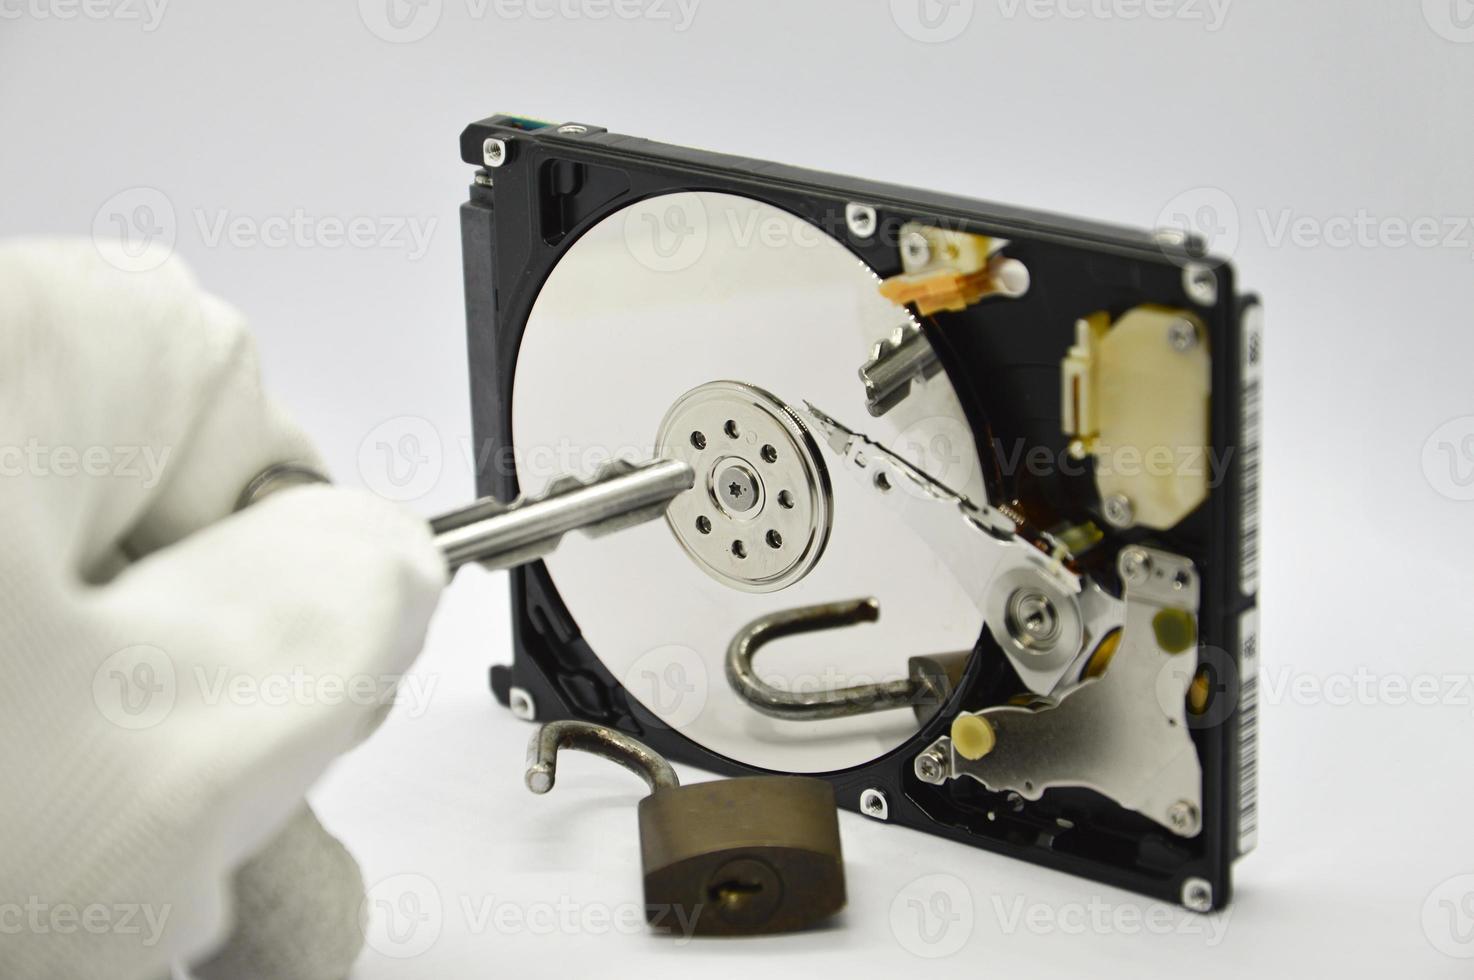 Platter-Festplatte 2,5 Zoll Größe, Datenschutzkonzept foto